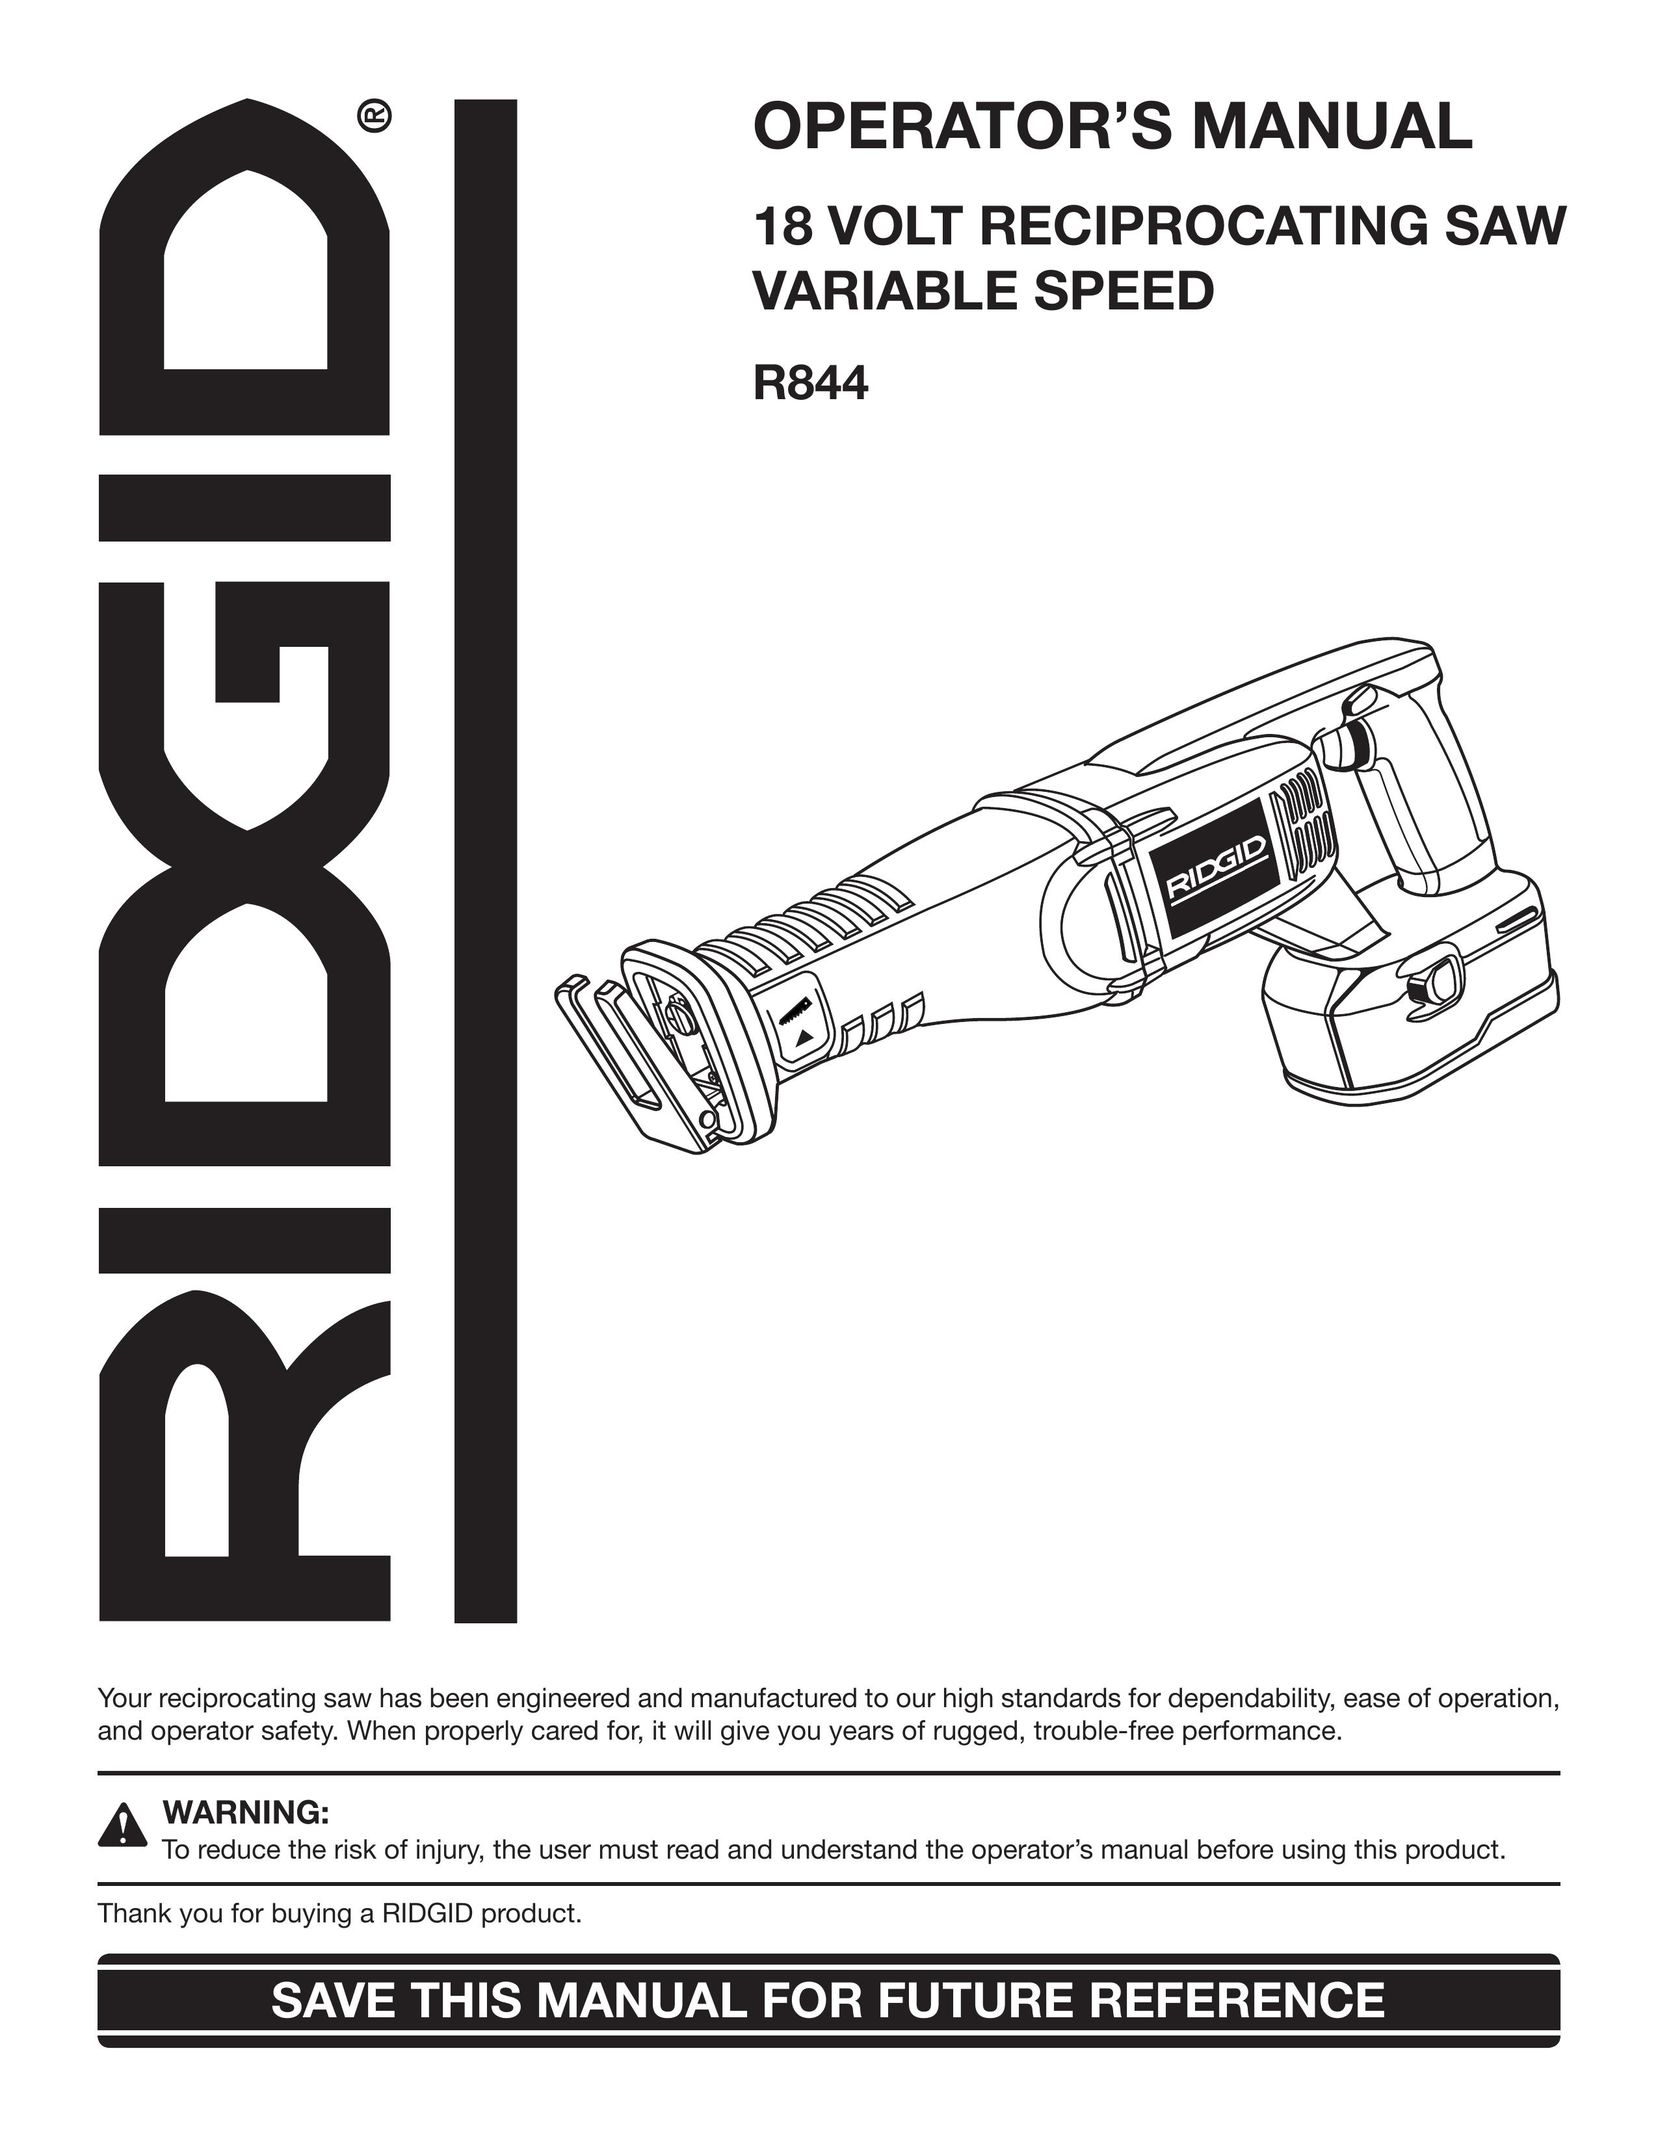 RIDGID R844 Cordless Saw User Manual